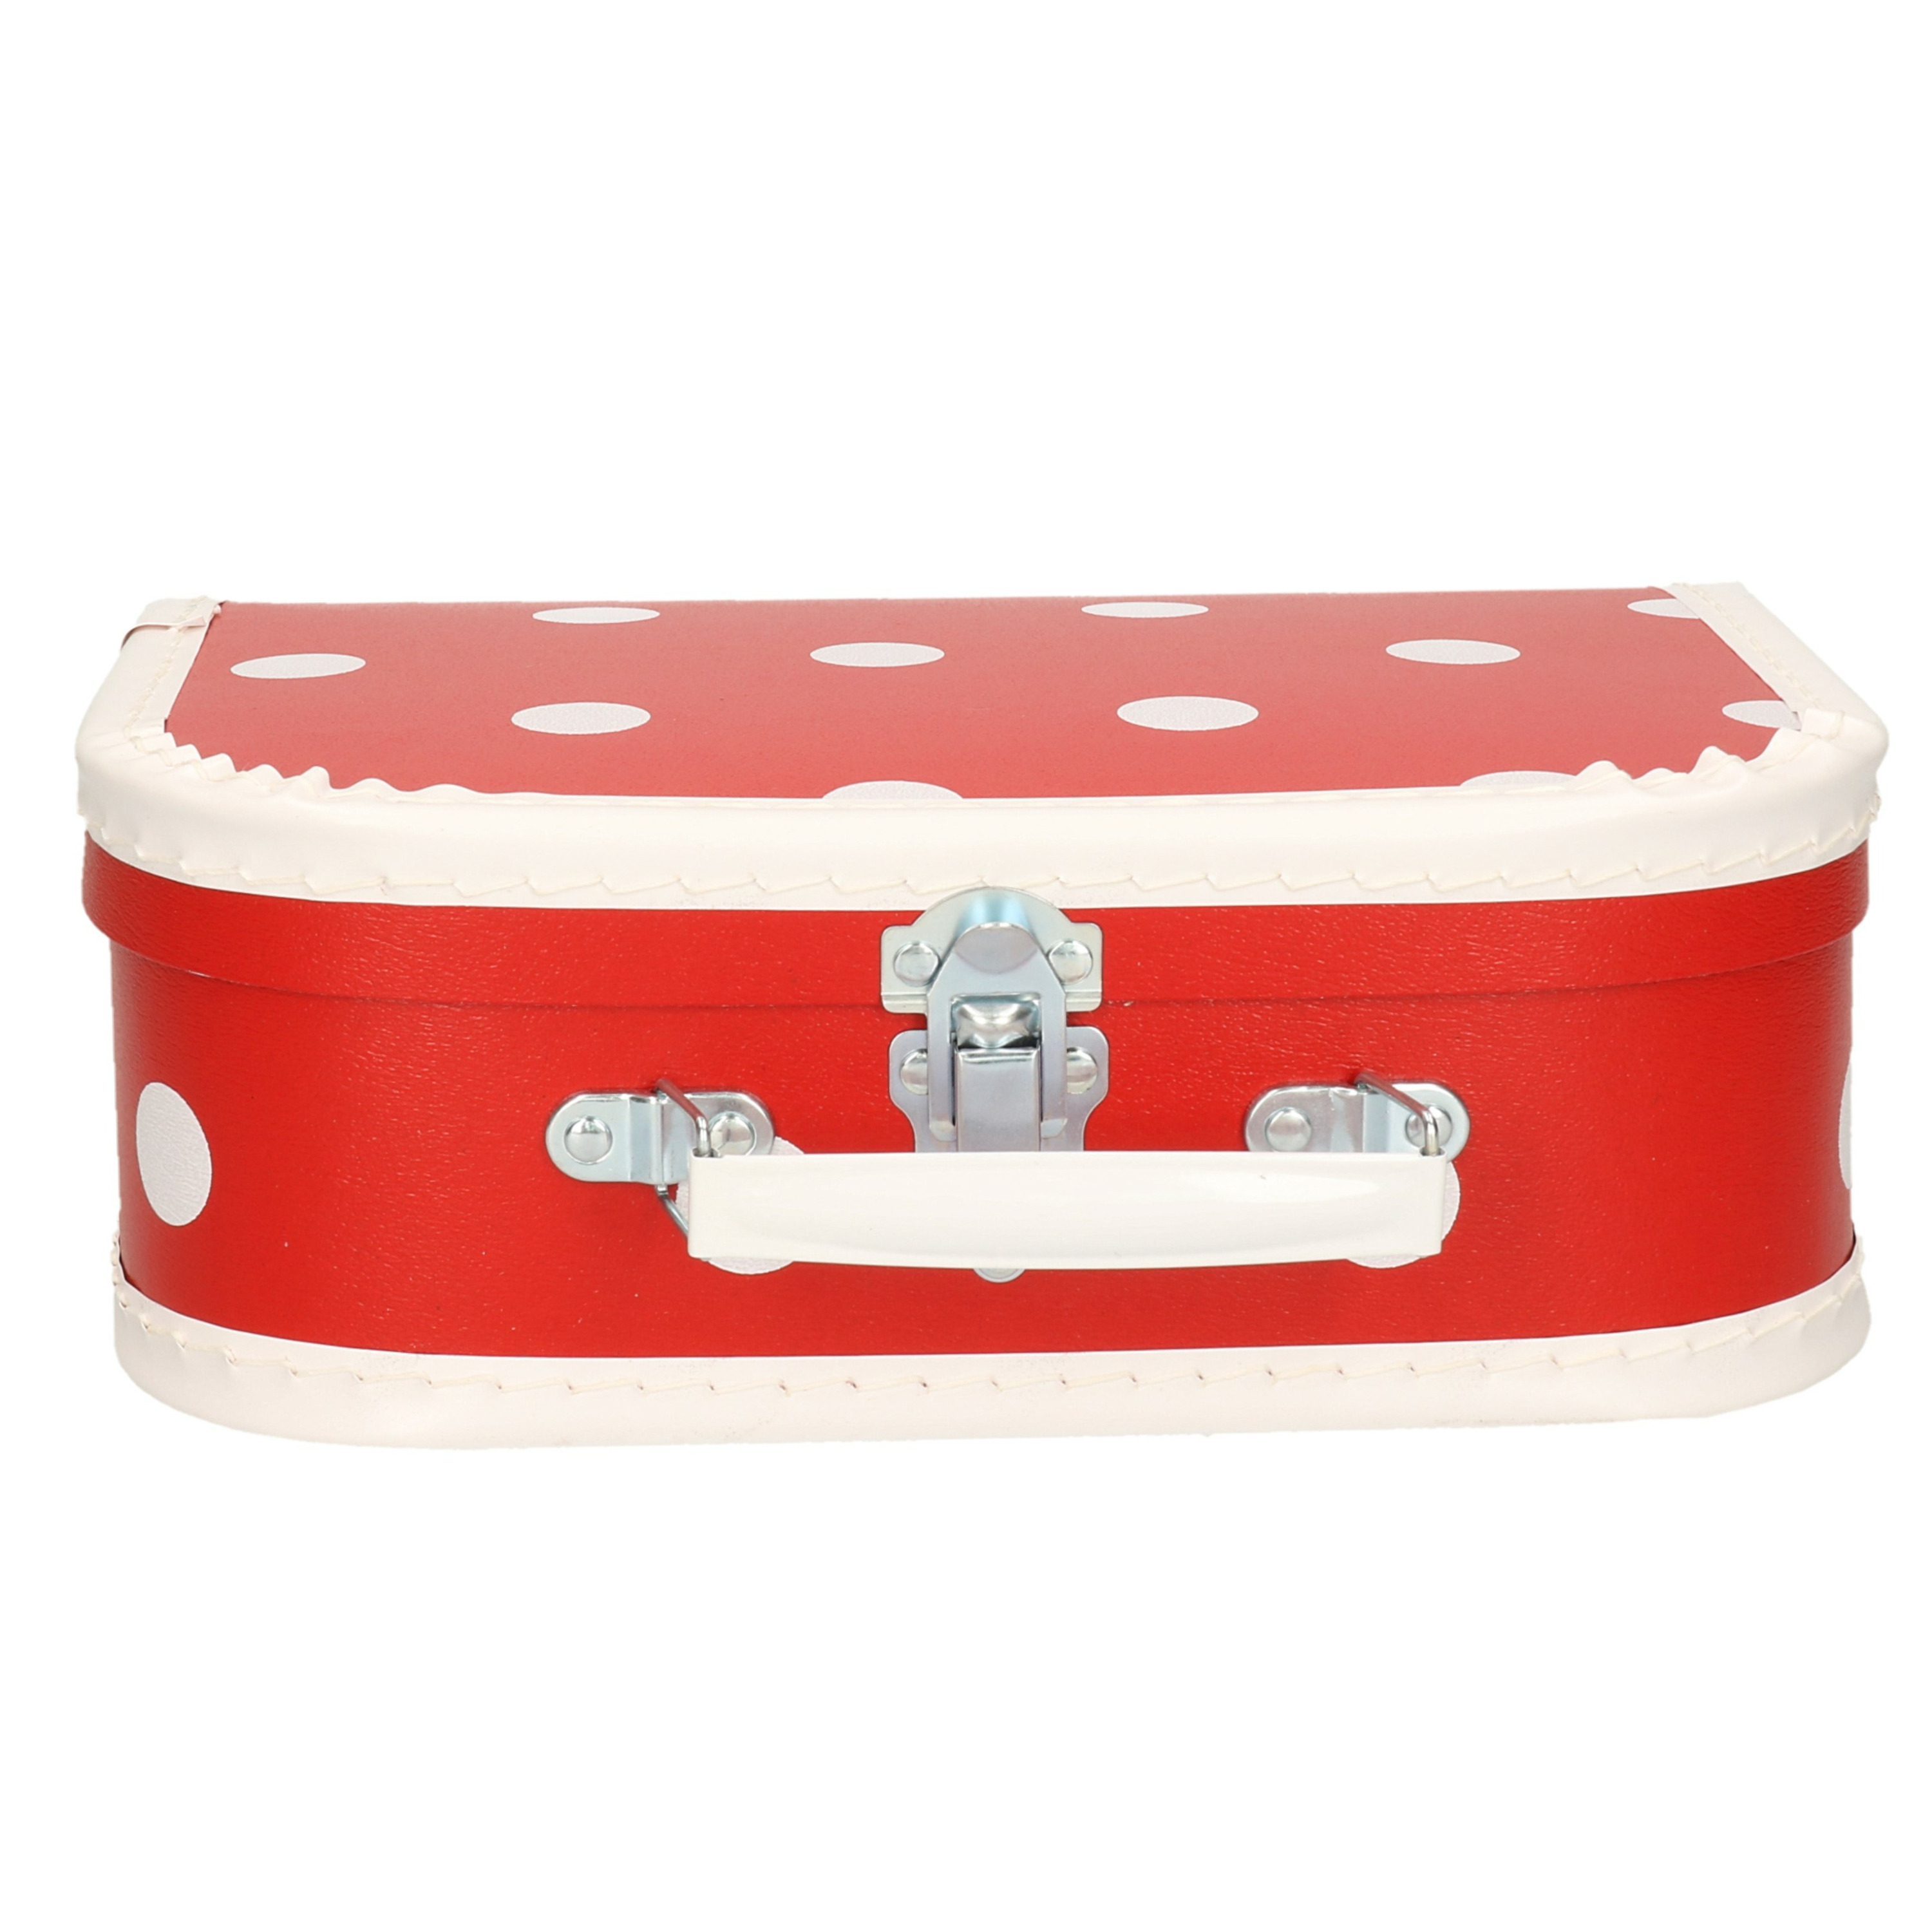 Babyshower cadeau koffertje rood polkadot 25 cm